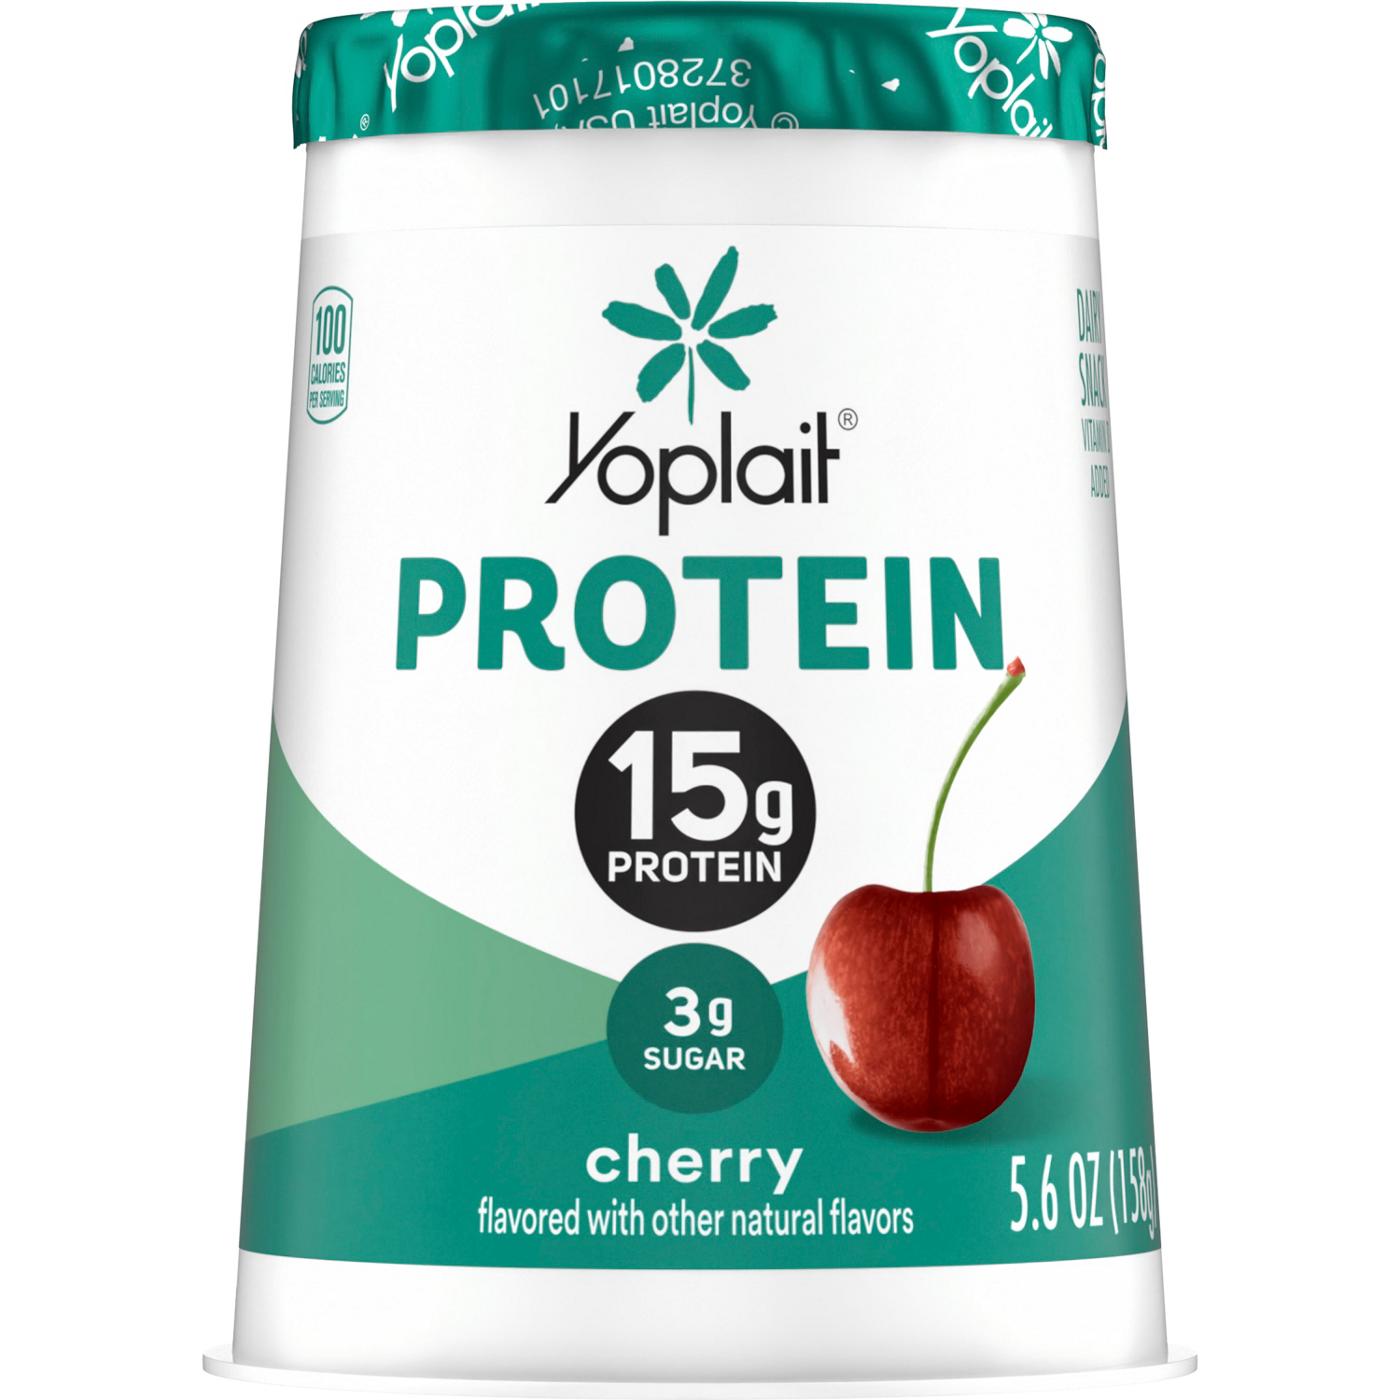 Yoplait 15g Protein Cherry Yogurt; image 1 of 4